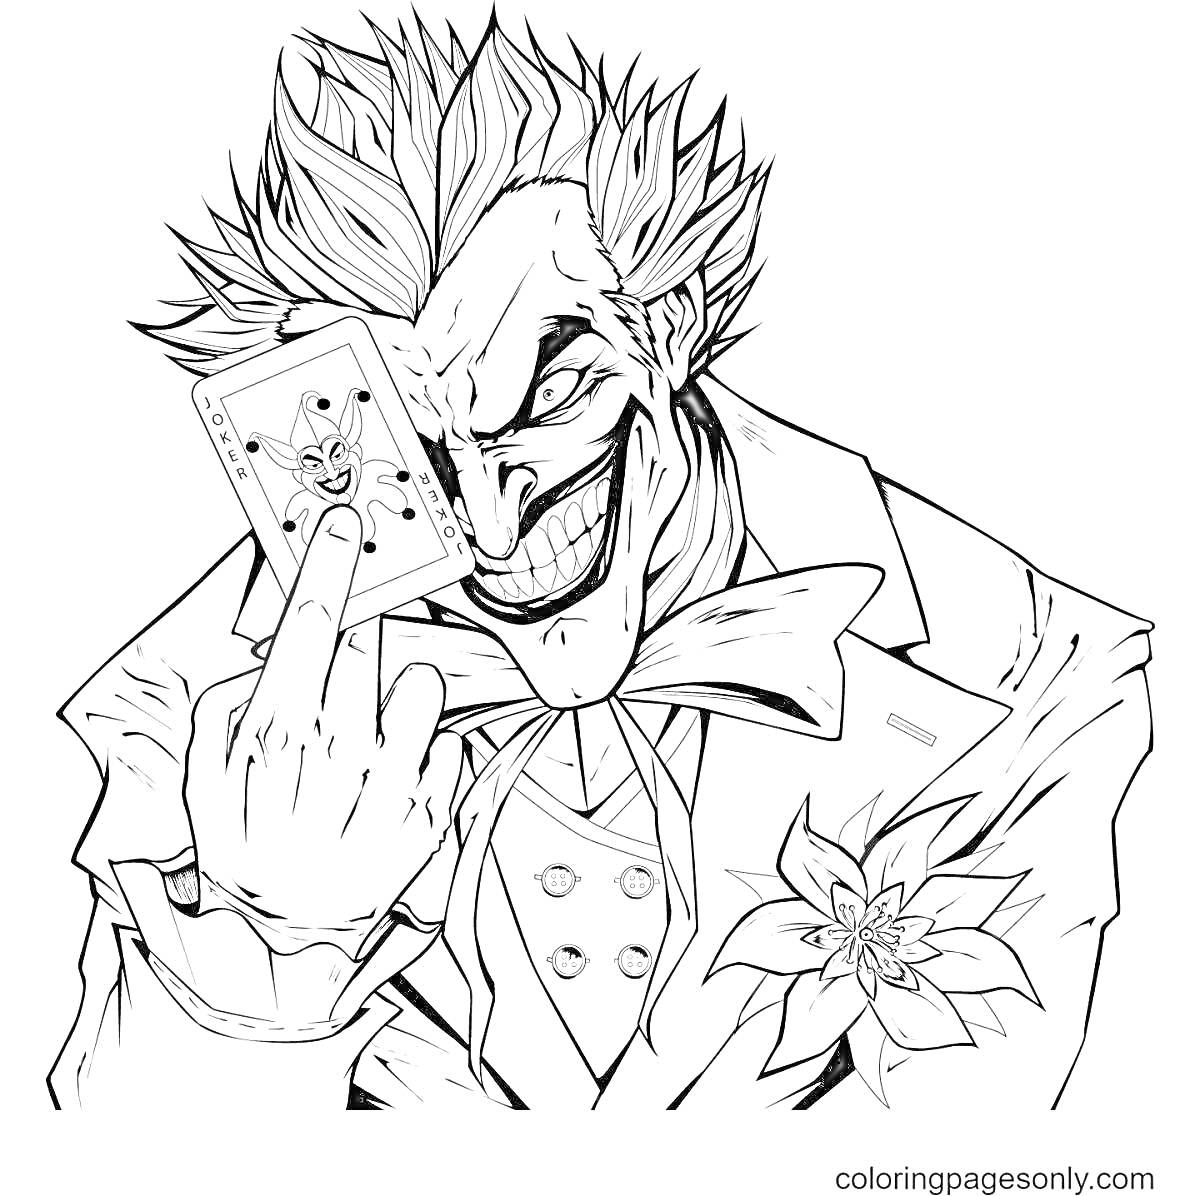 Раскраска Джокер с картой в руке, с цветком на лацкане пиджака